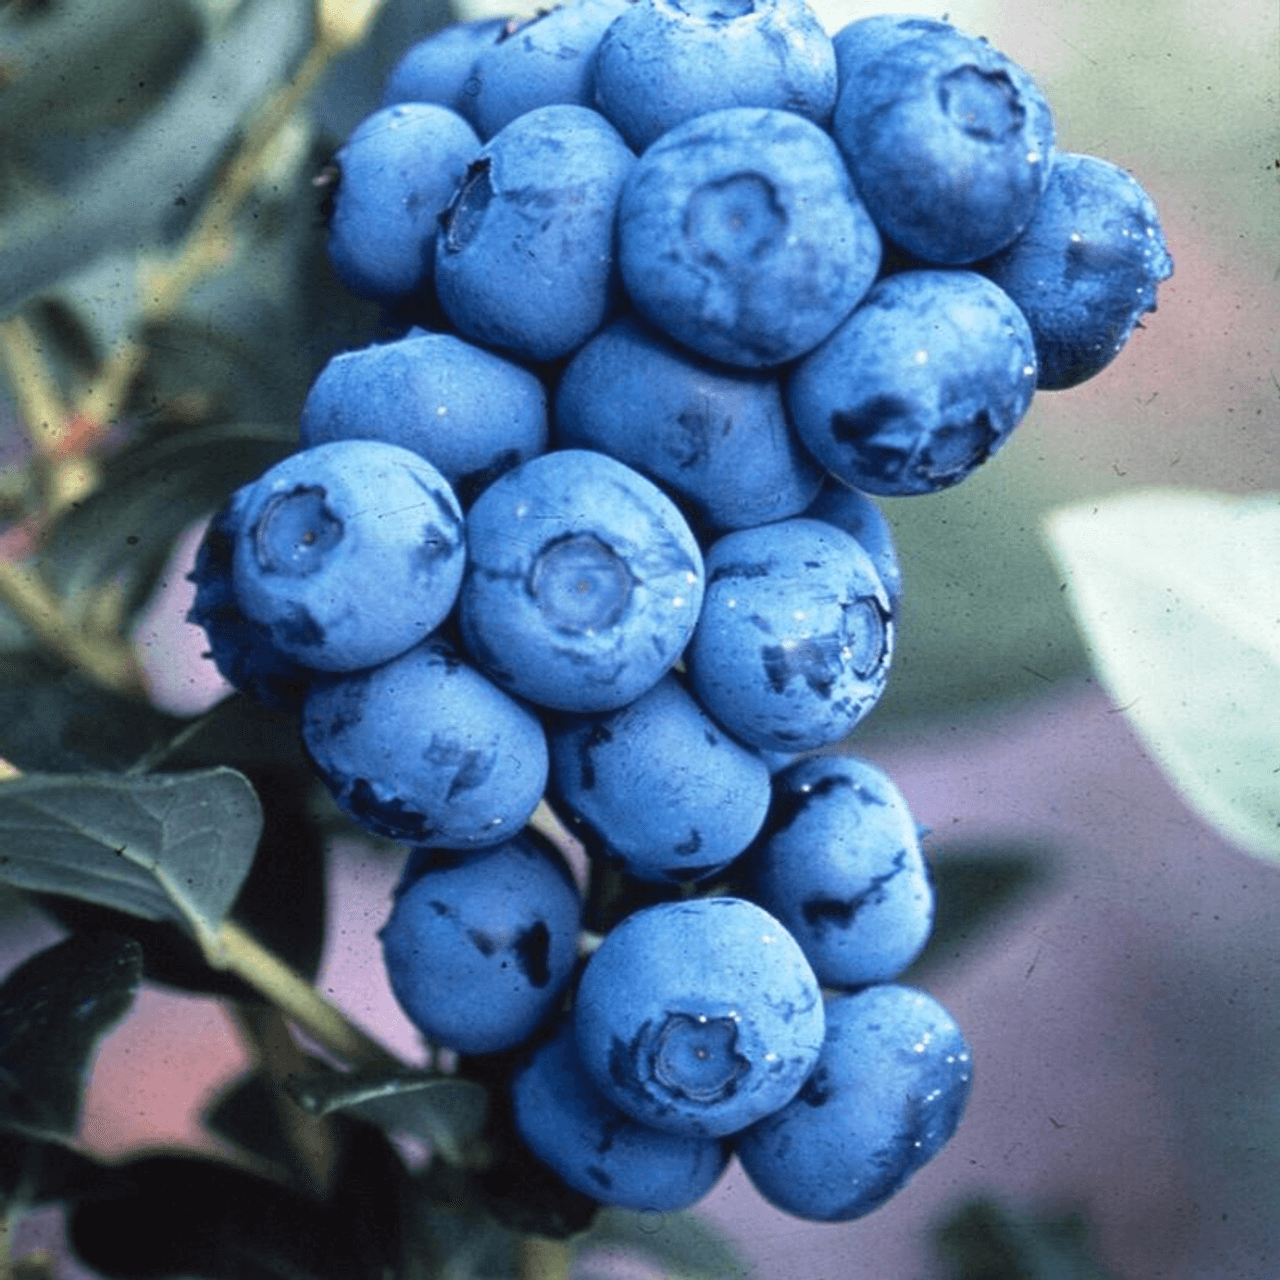 High Bush Blueberry - TN Nursery